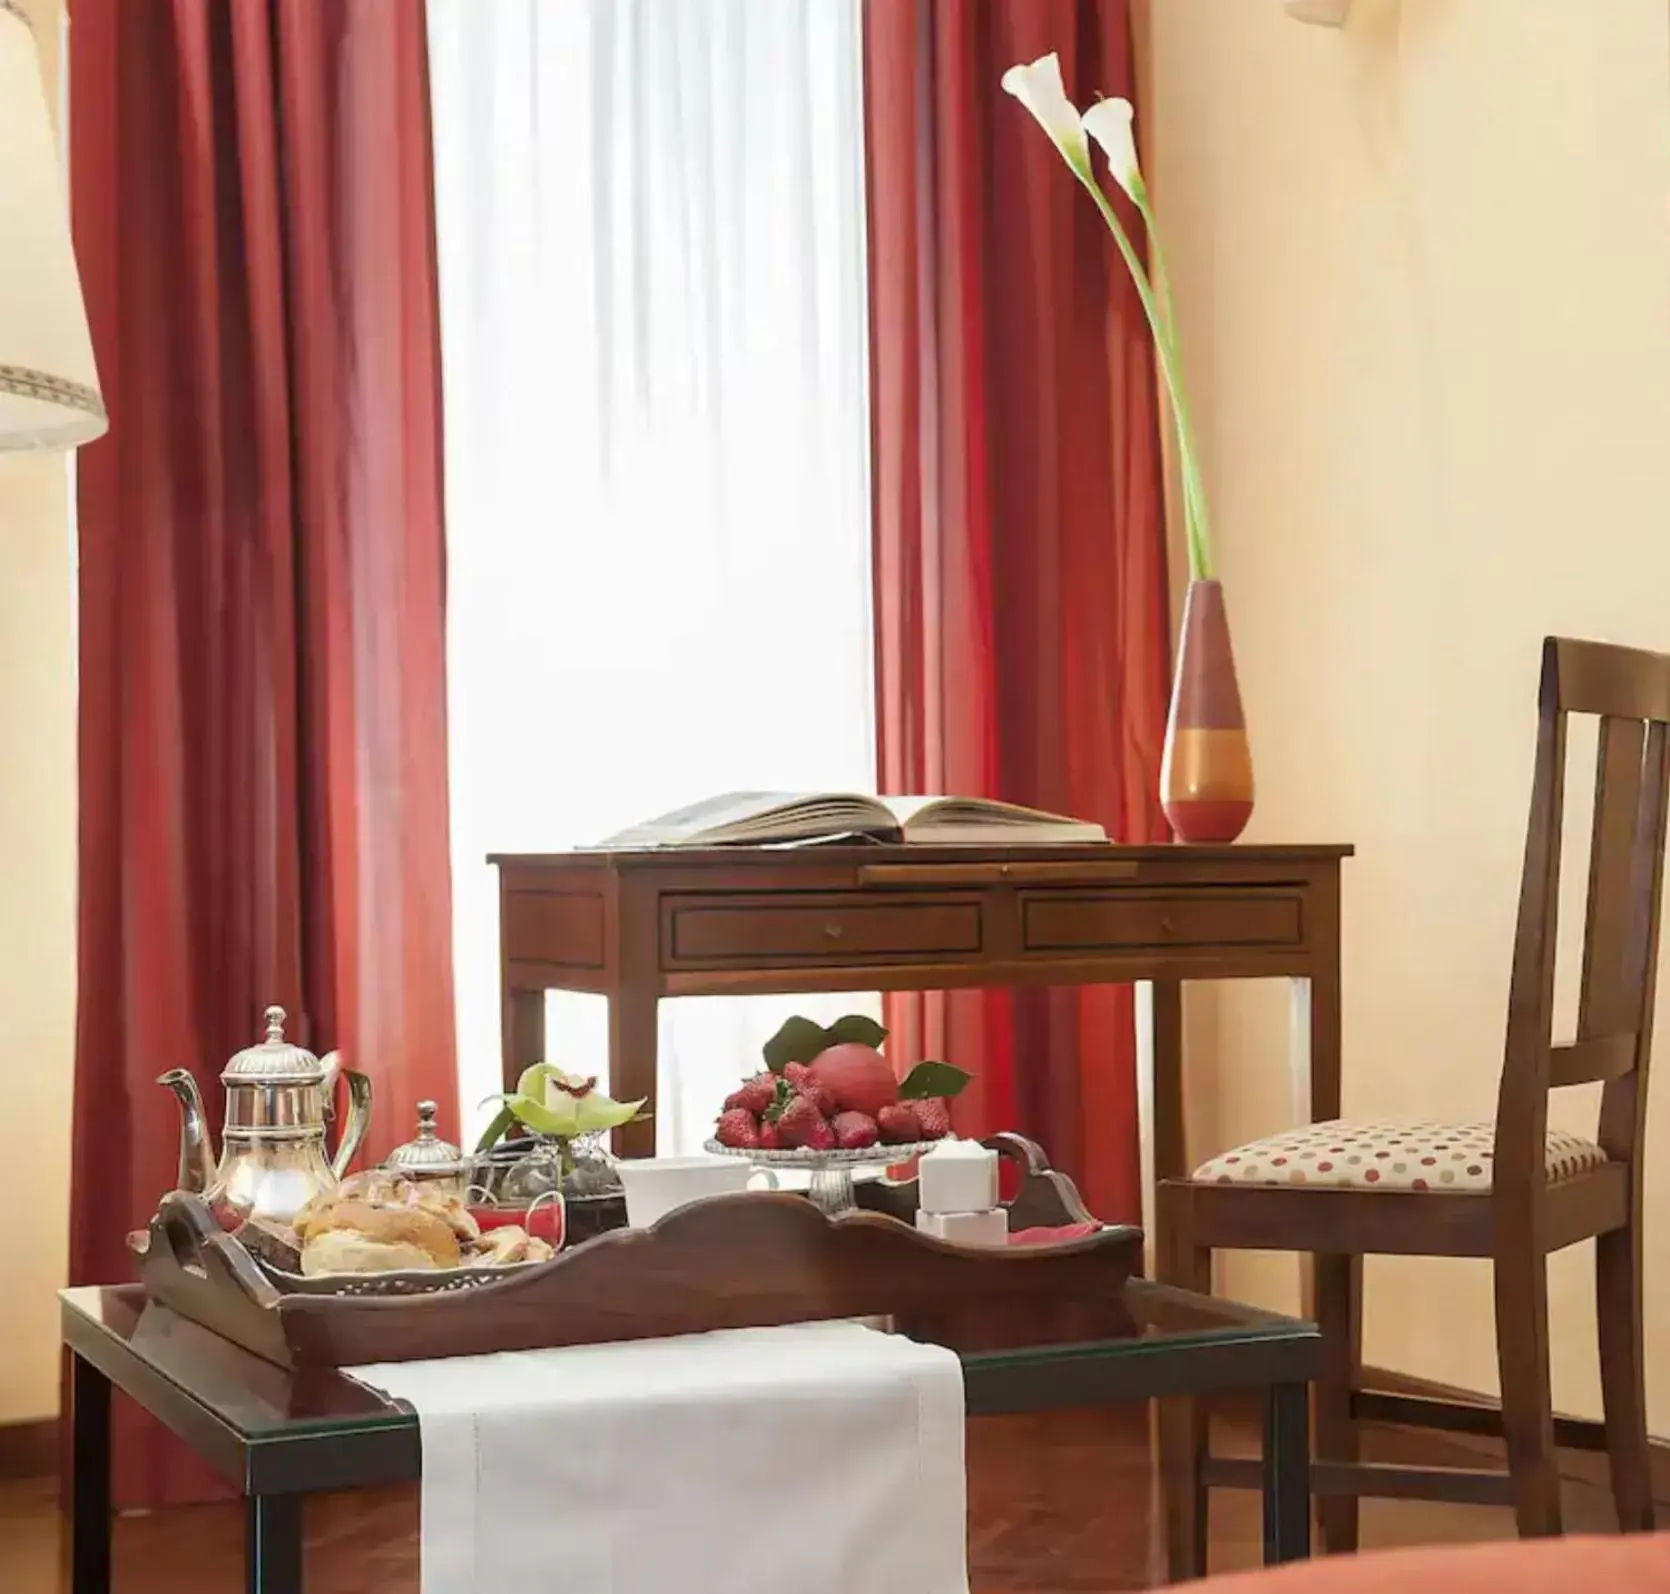 Bedroom, Breakfast in All'Orologio